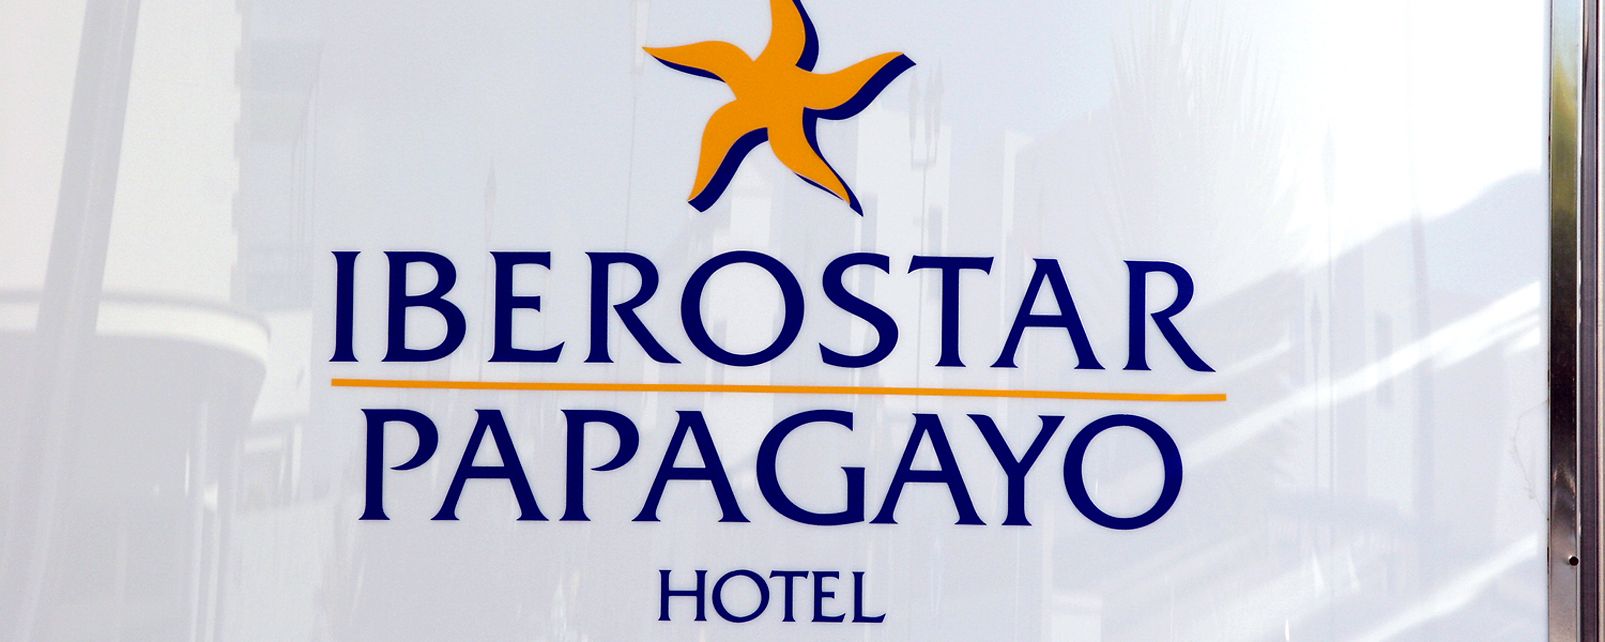 Hotel The Mirador Papagayo